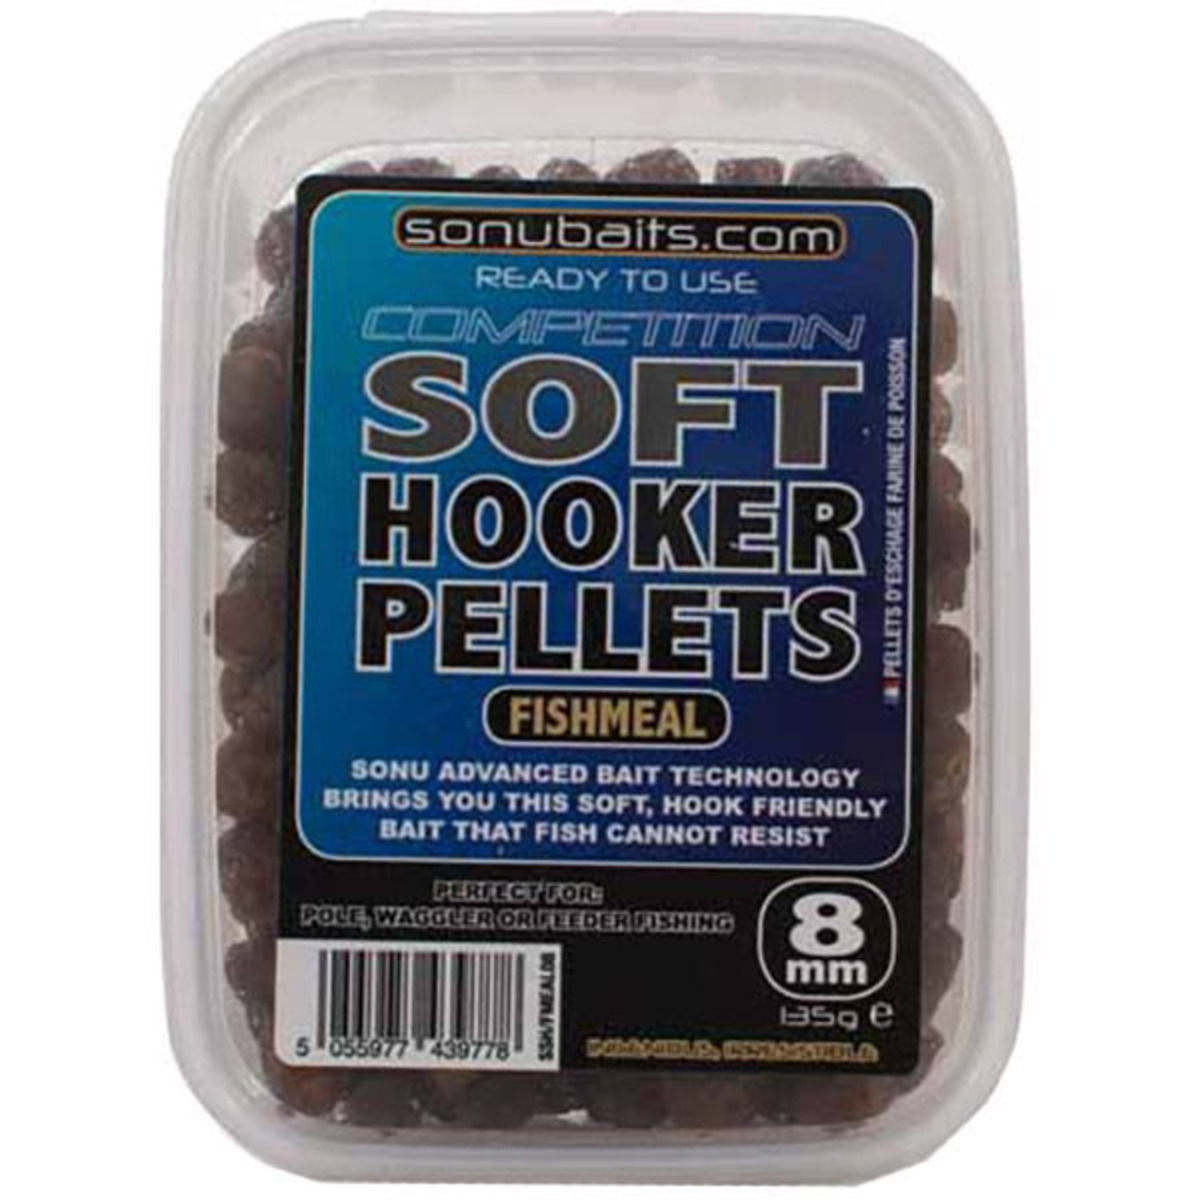 Sonubaits Soft Hooker Pellets Fishmeal - 8 mm 